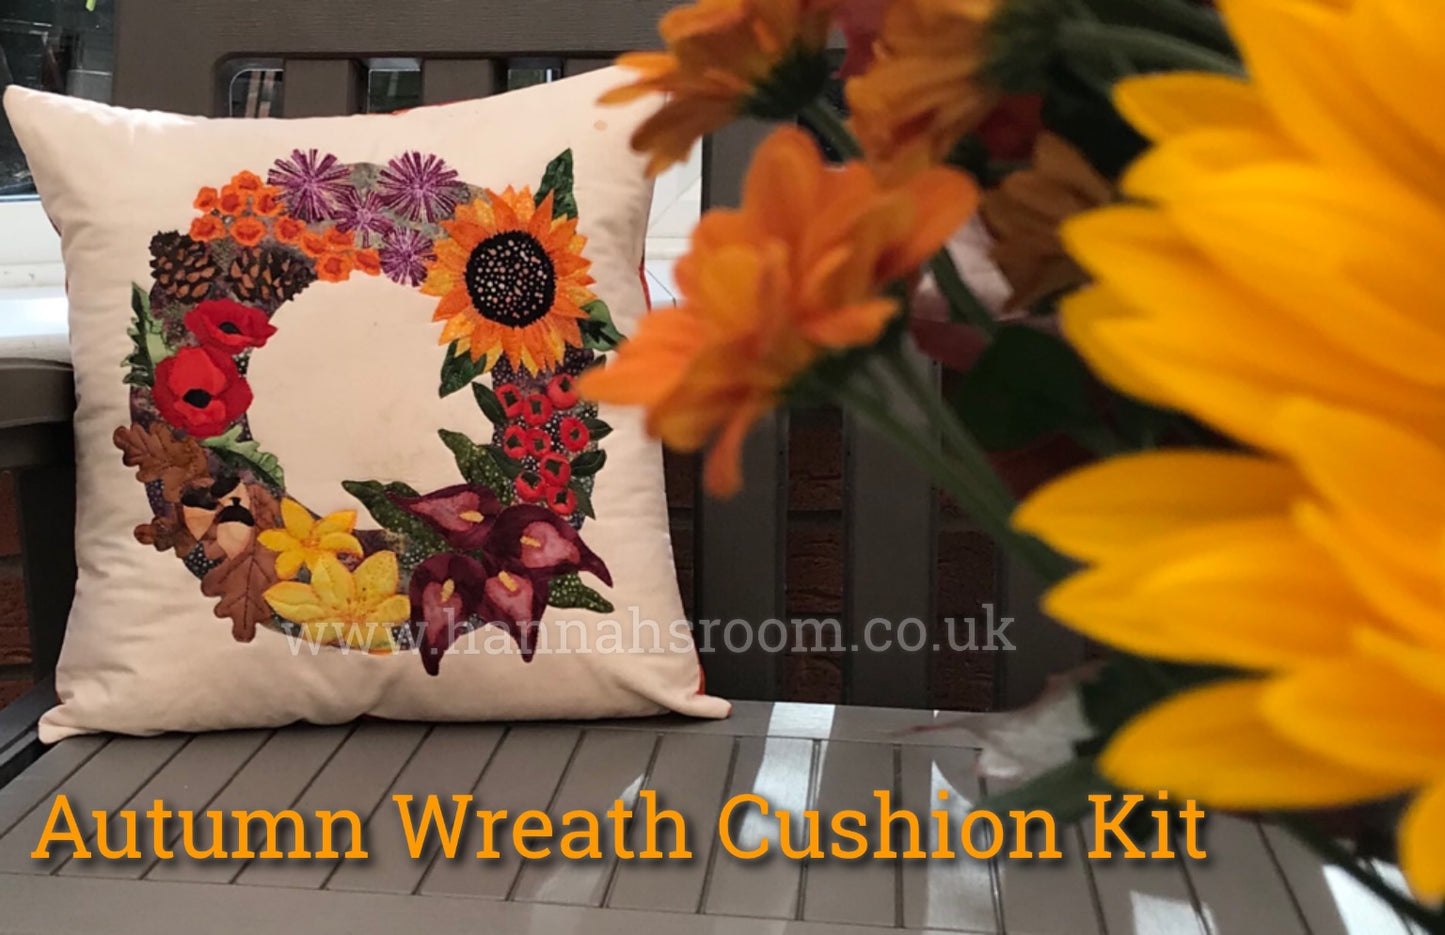 Autumnal Wreath Cushion Kit